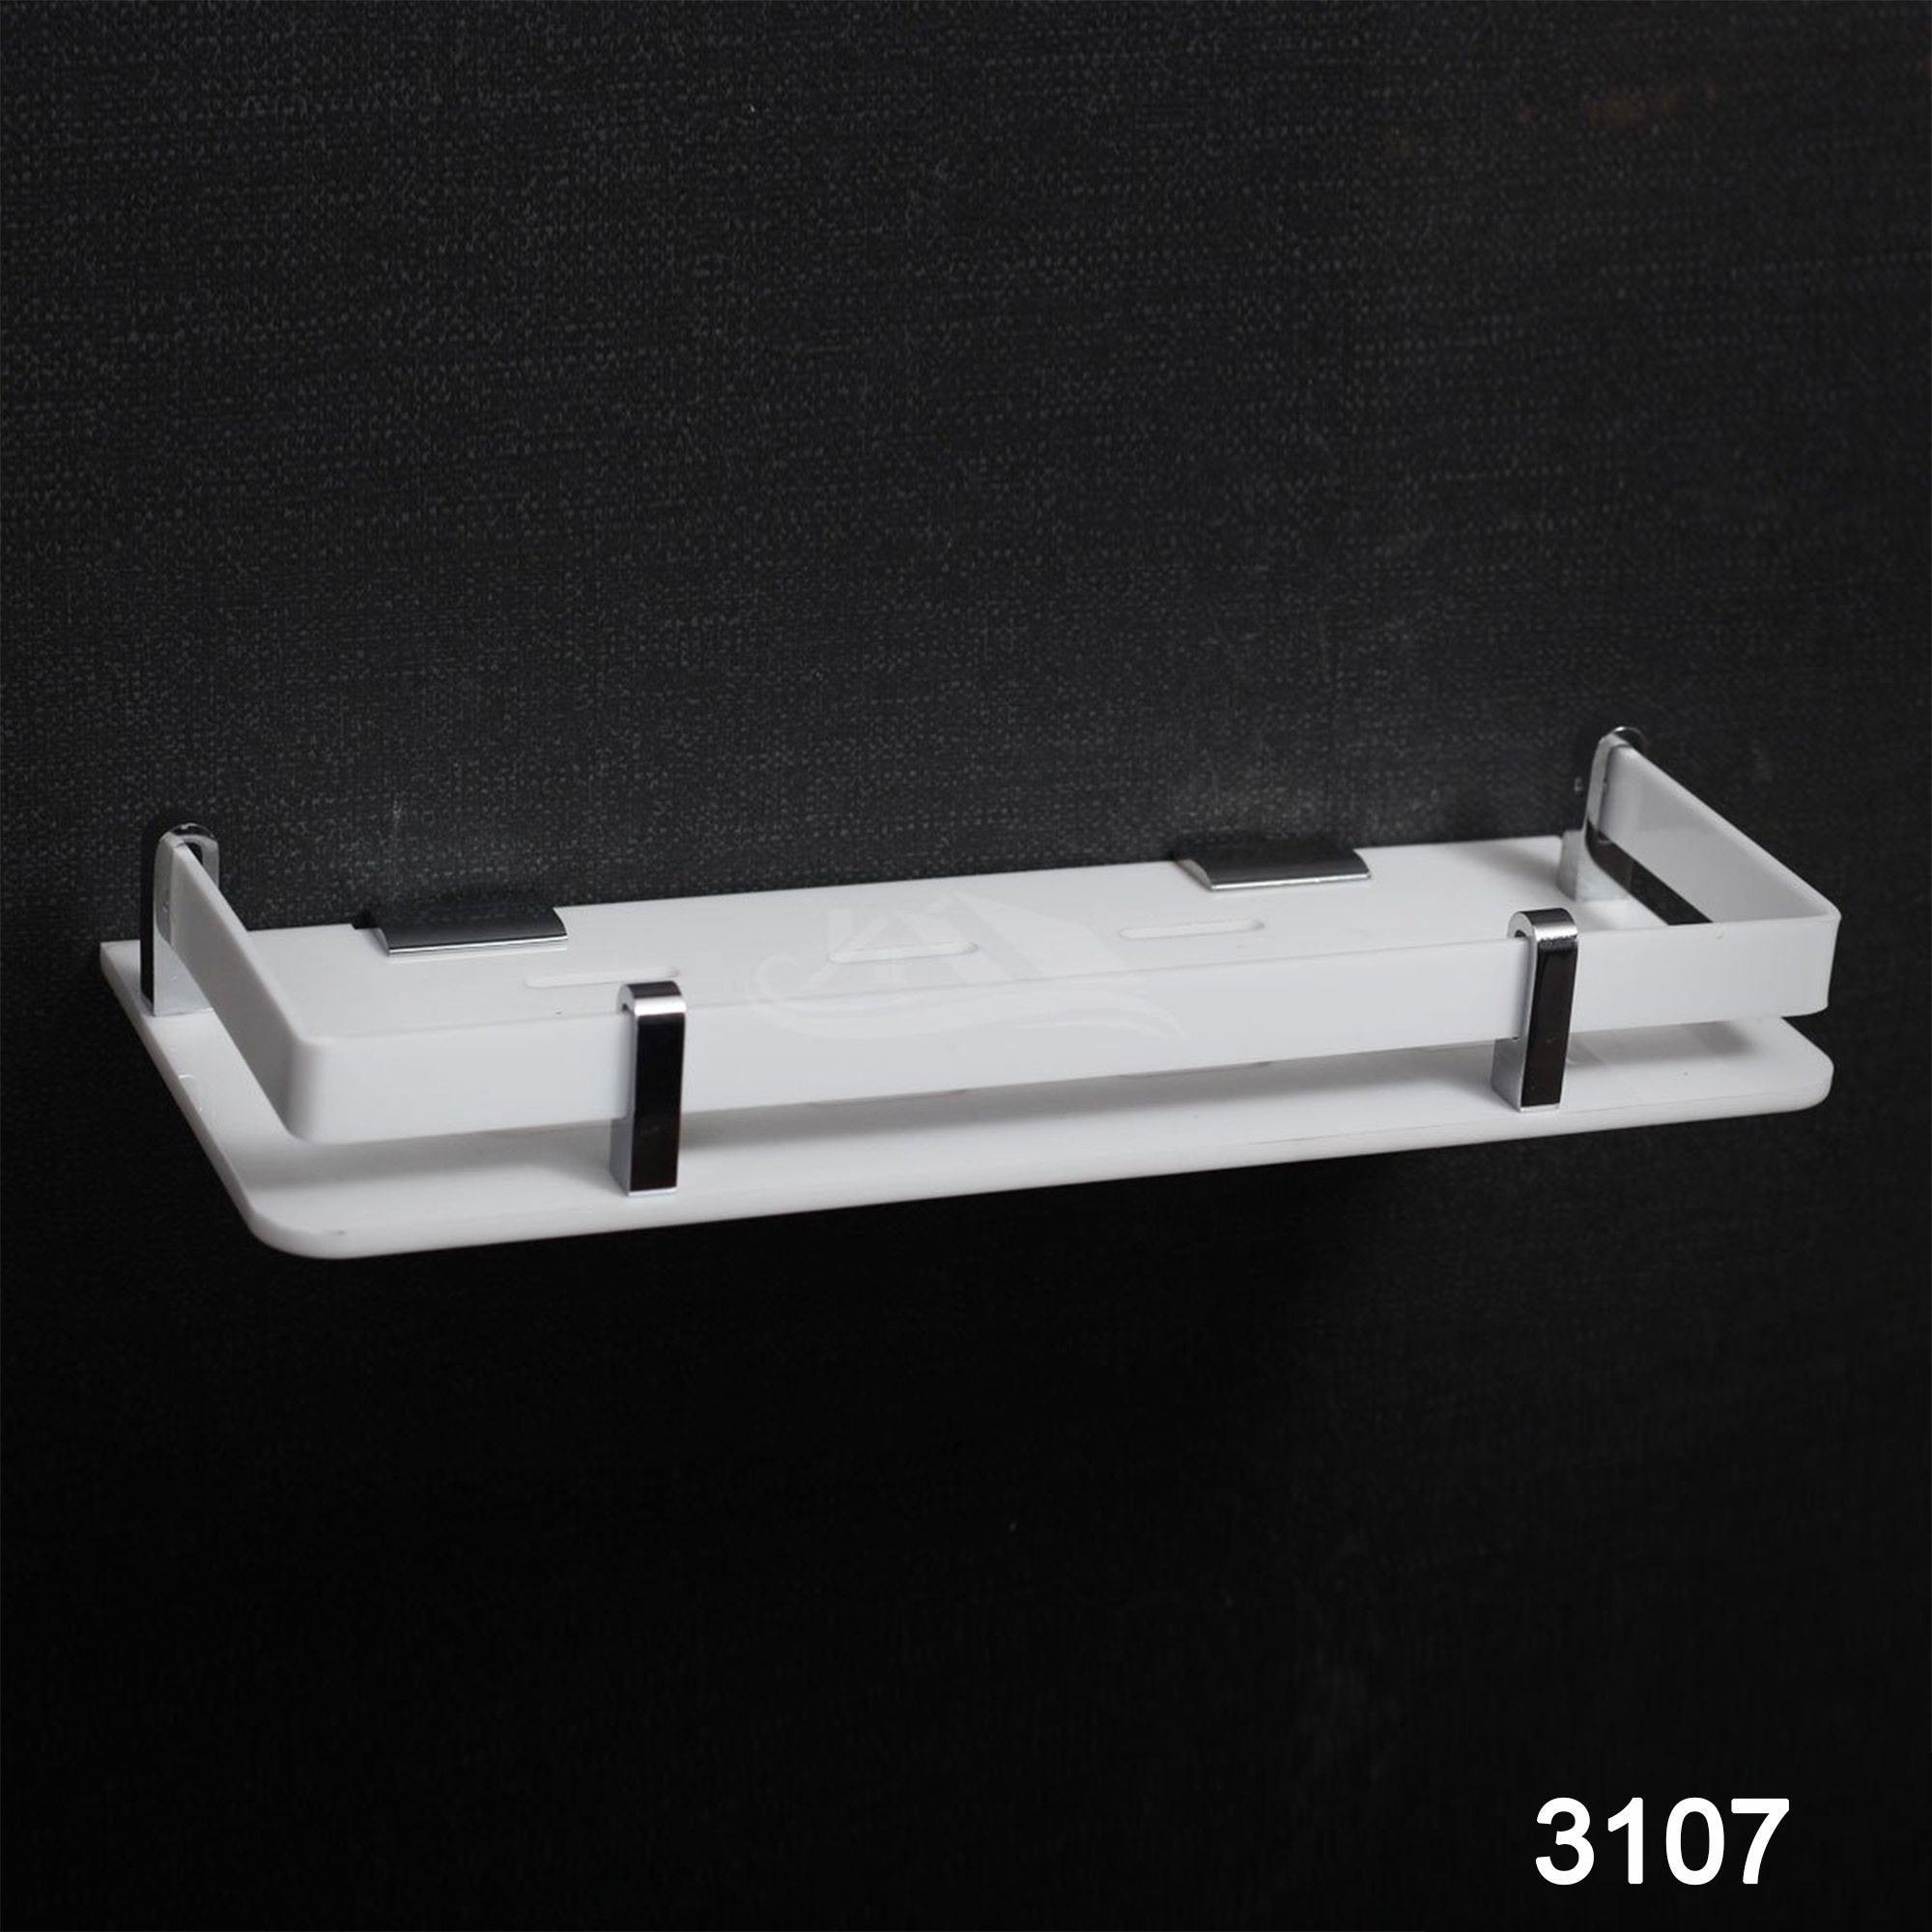 3107 Acrylic Wall Mount Shelf Rack Kitchen and Bathroom Accessories (15X5-inch) - SkyShopy